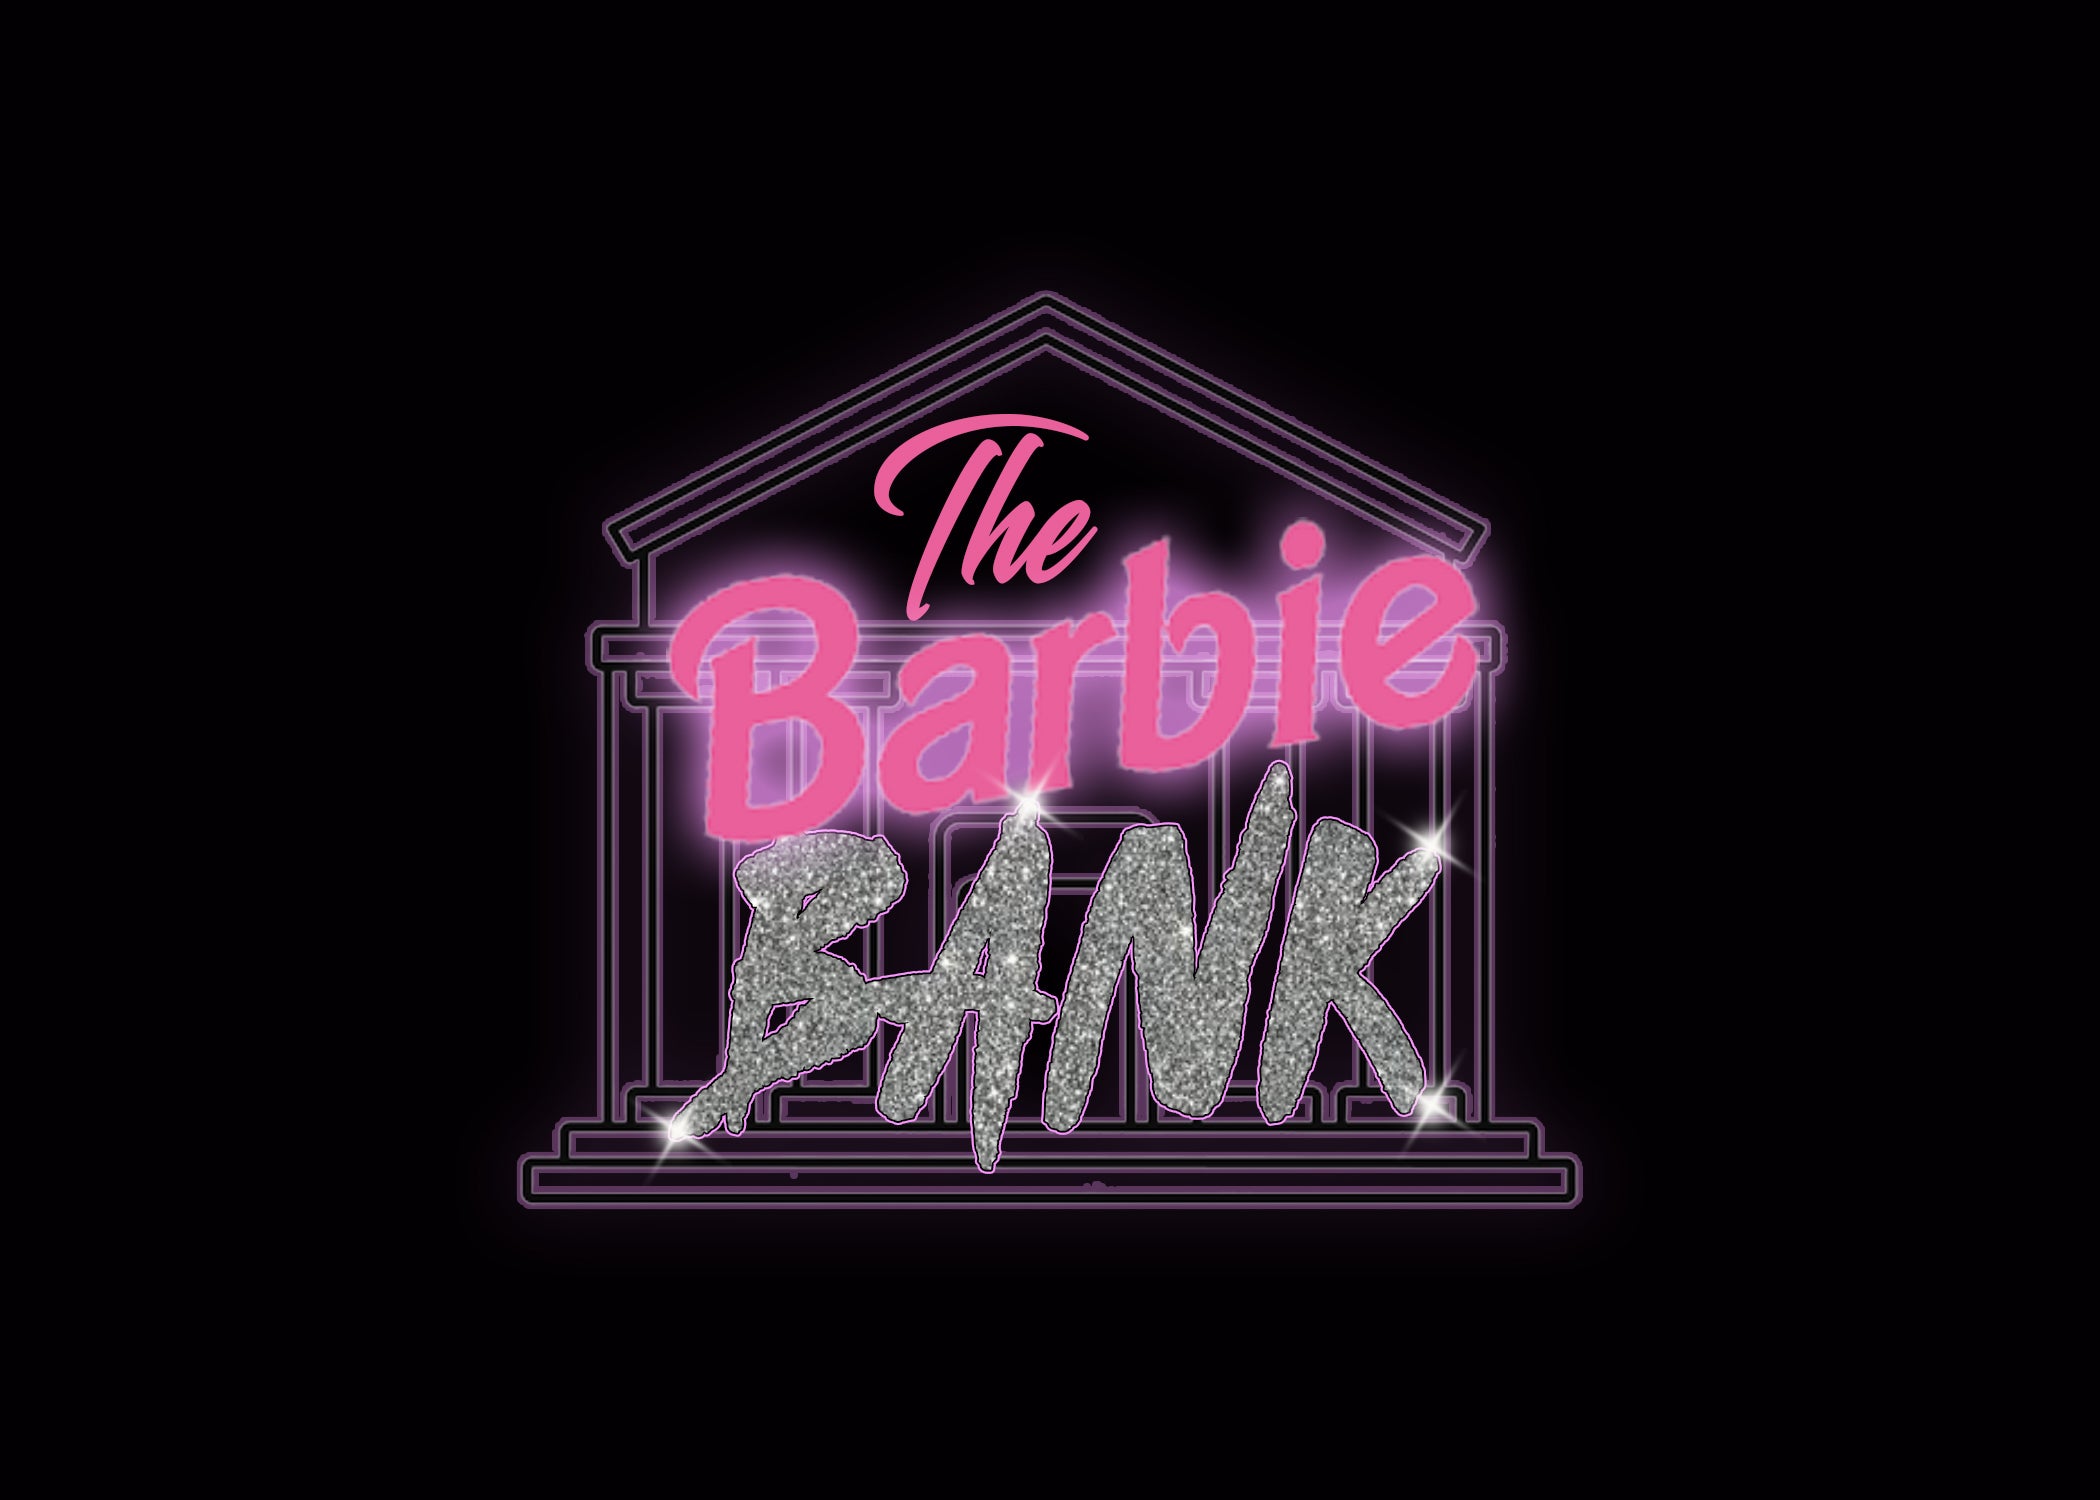 barbie bank